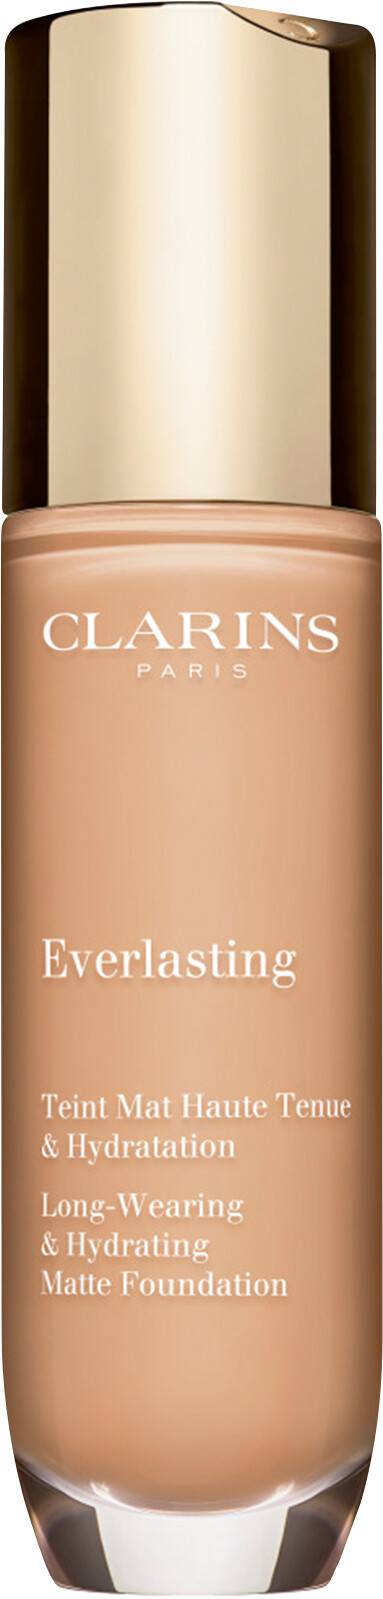 Clarins Everlasting Long-Wearing & Hydrating Matte Foundation 30ml 108.3N - Organza